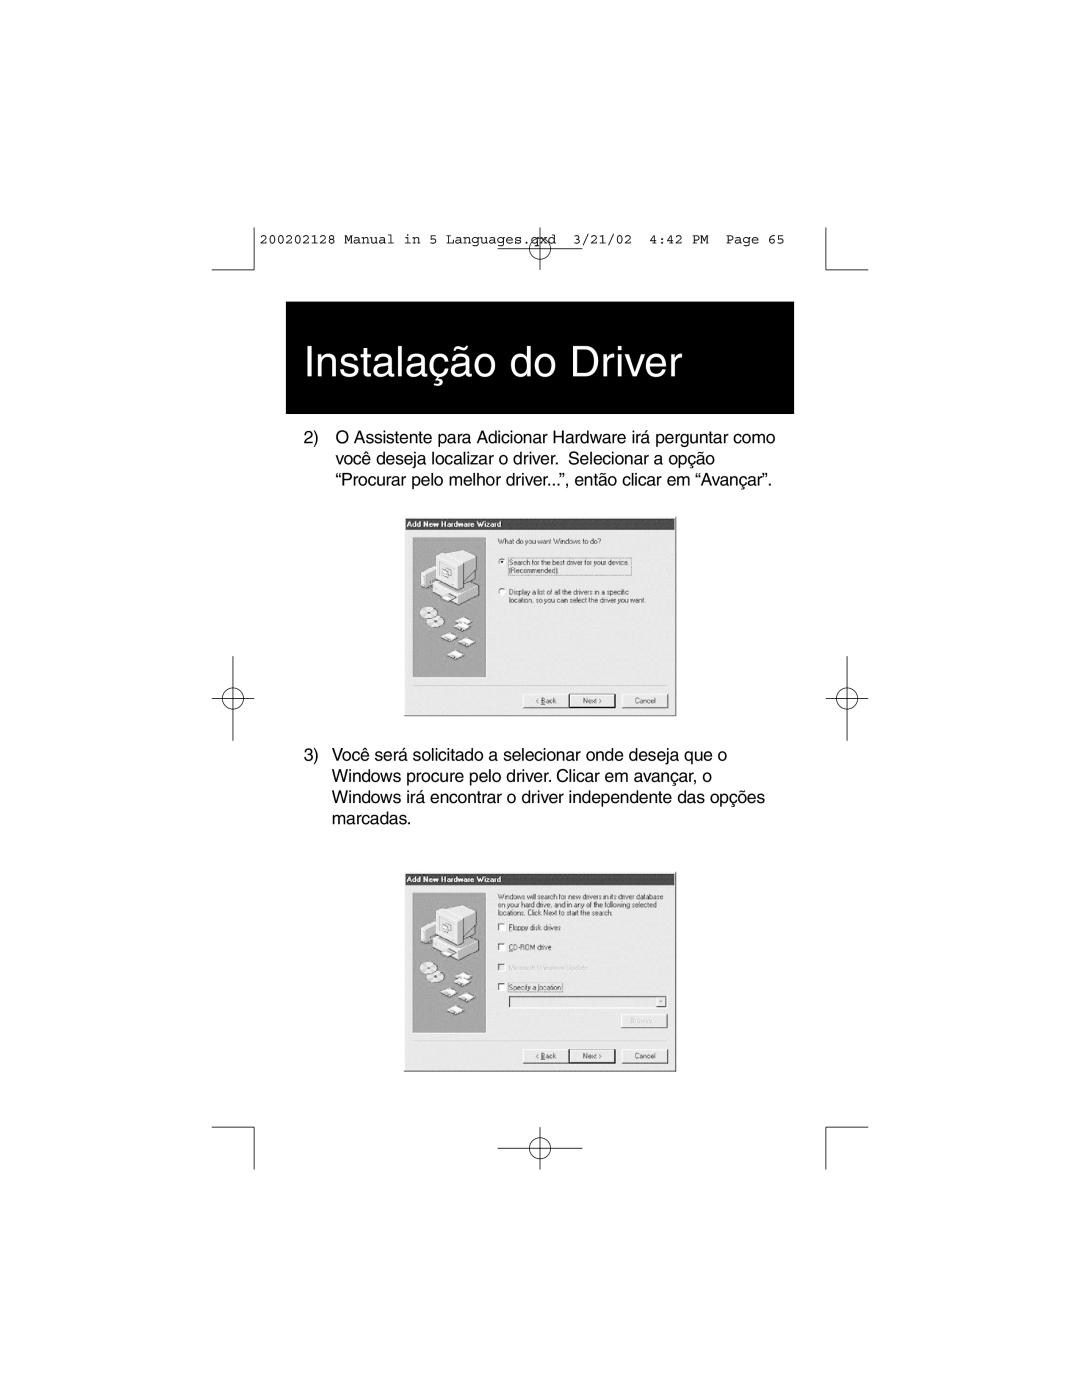 Tripp Lite F200-003-R user manual Instalação do Driver, Manual in 5 Languages.qxd 3/21/02 442 PM Page 